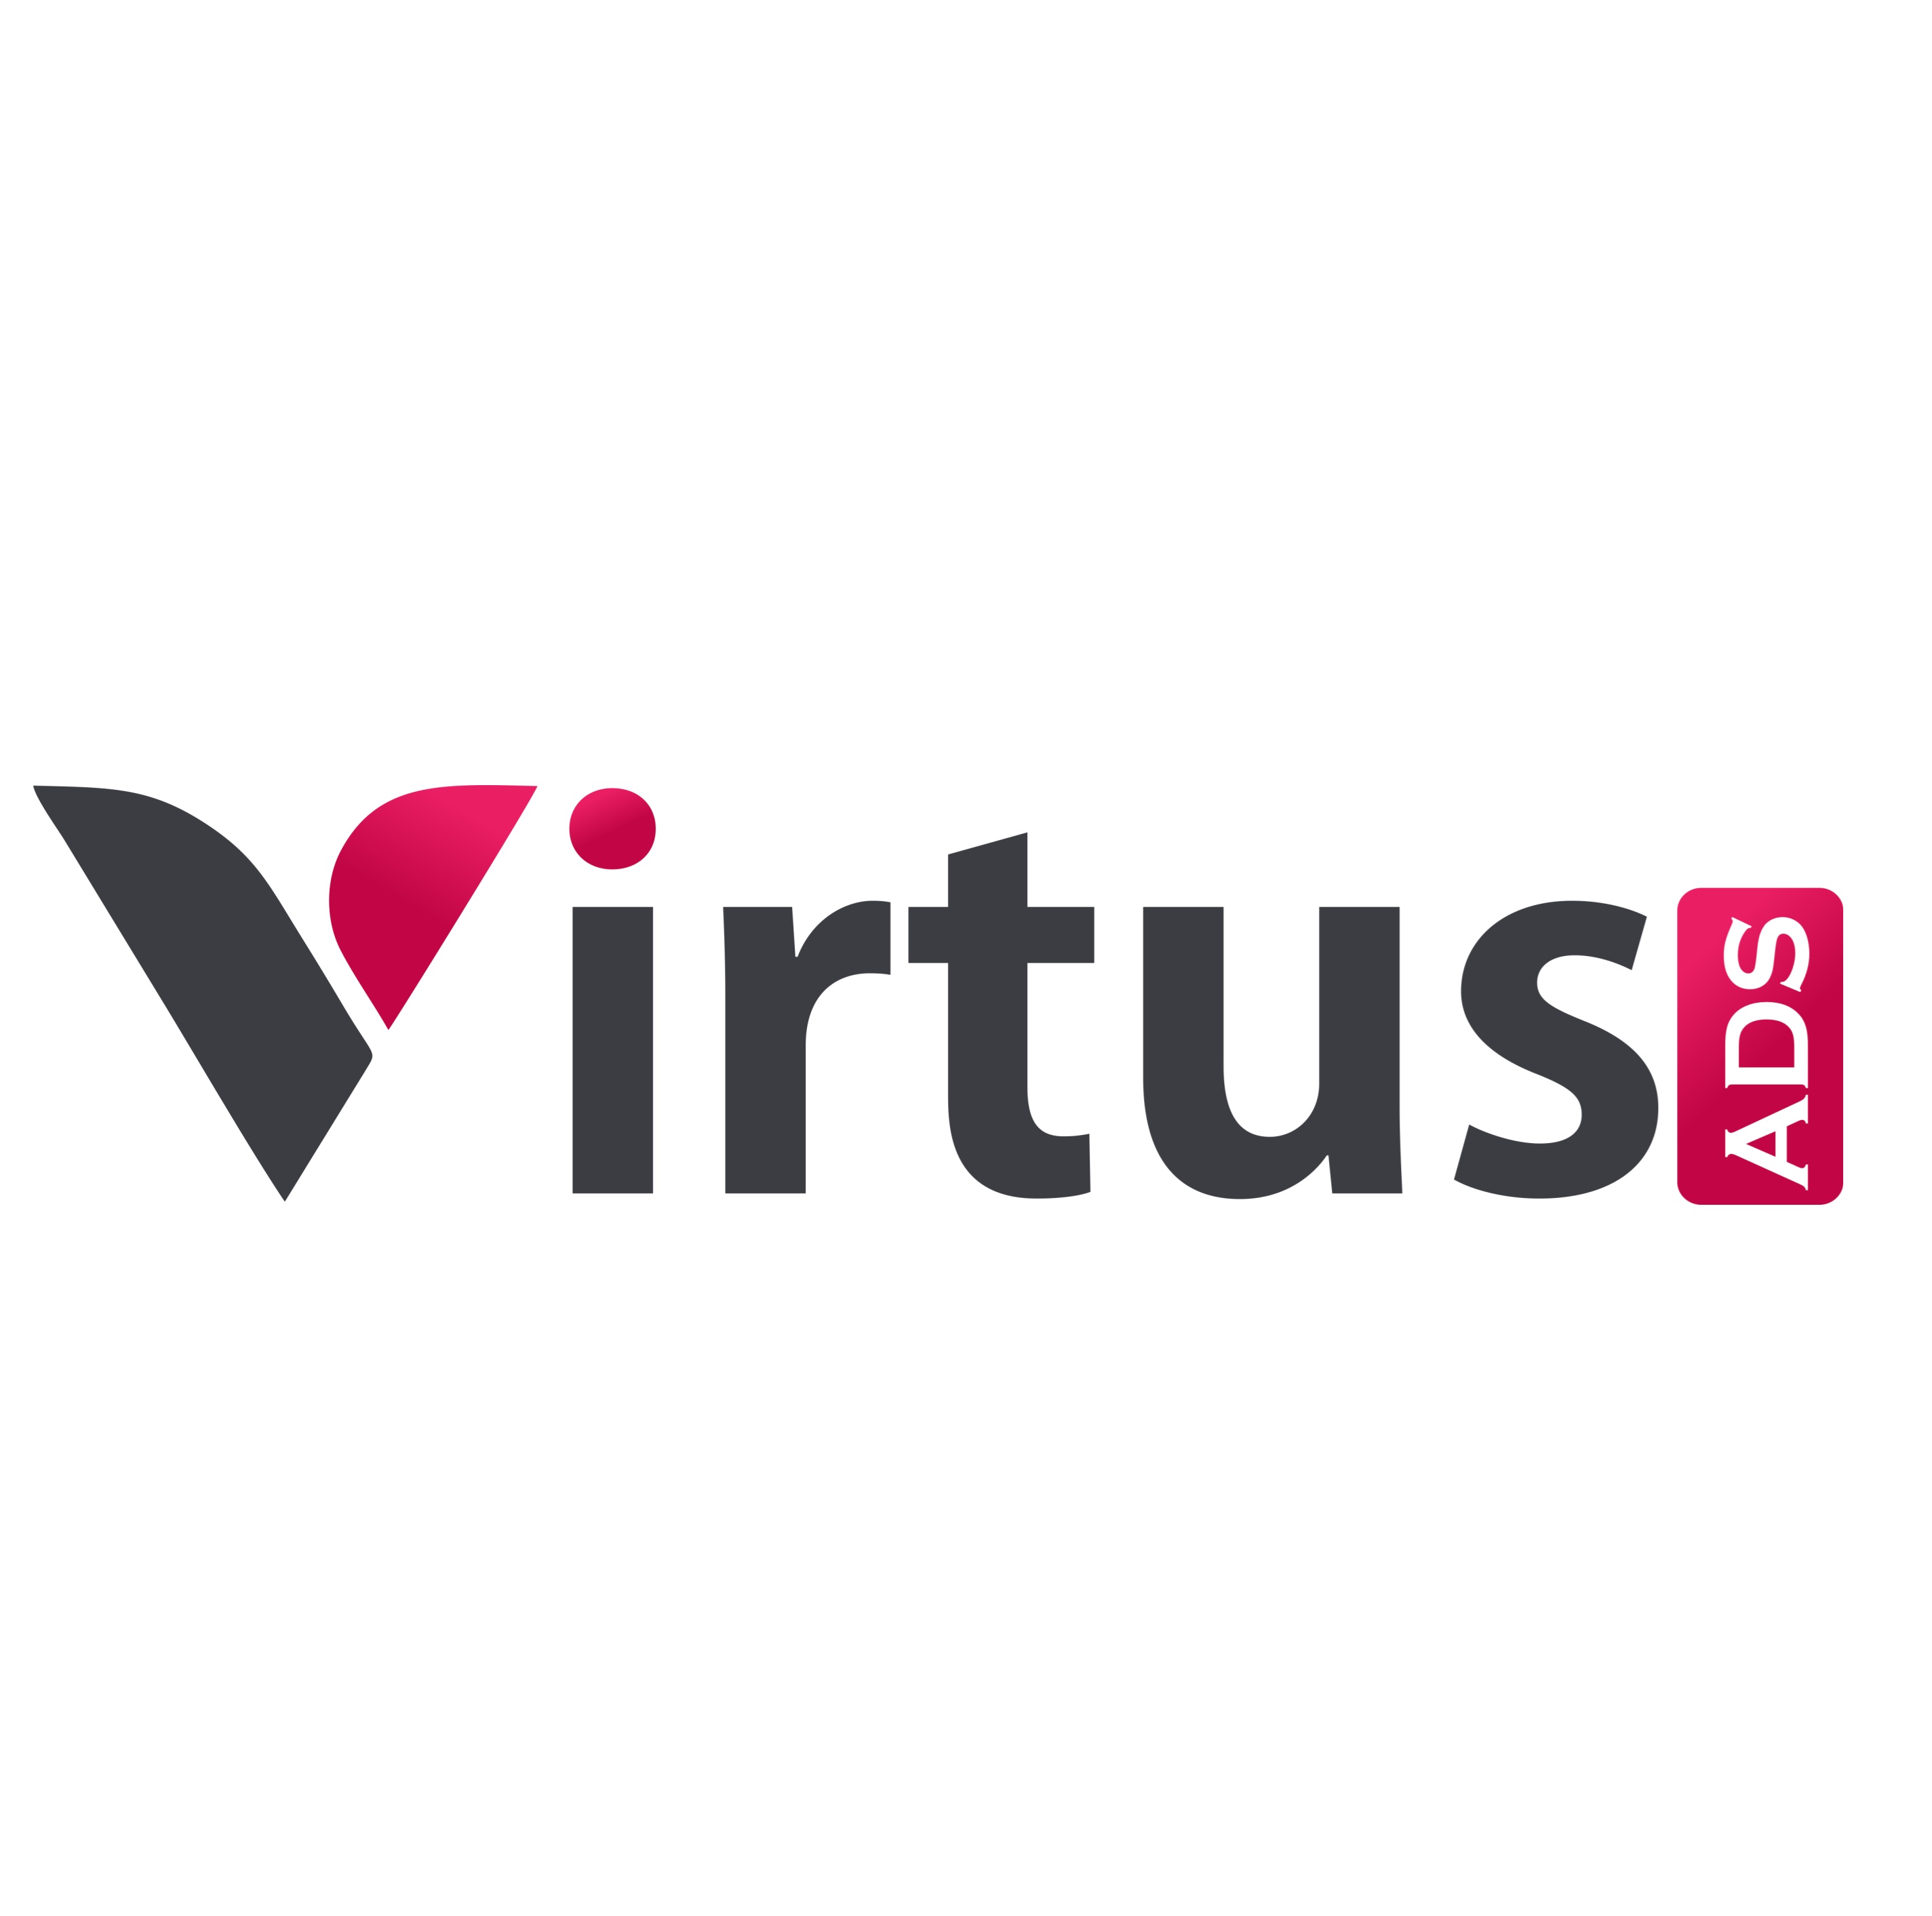 VirtusAds SEO Agency in India